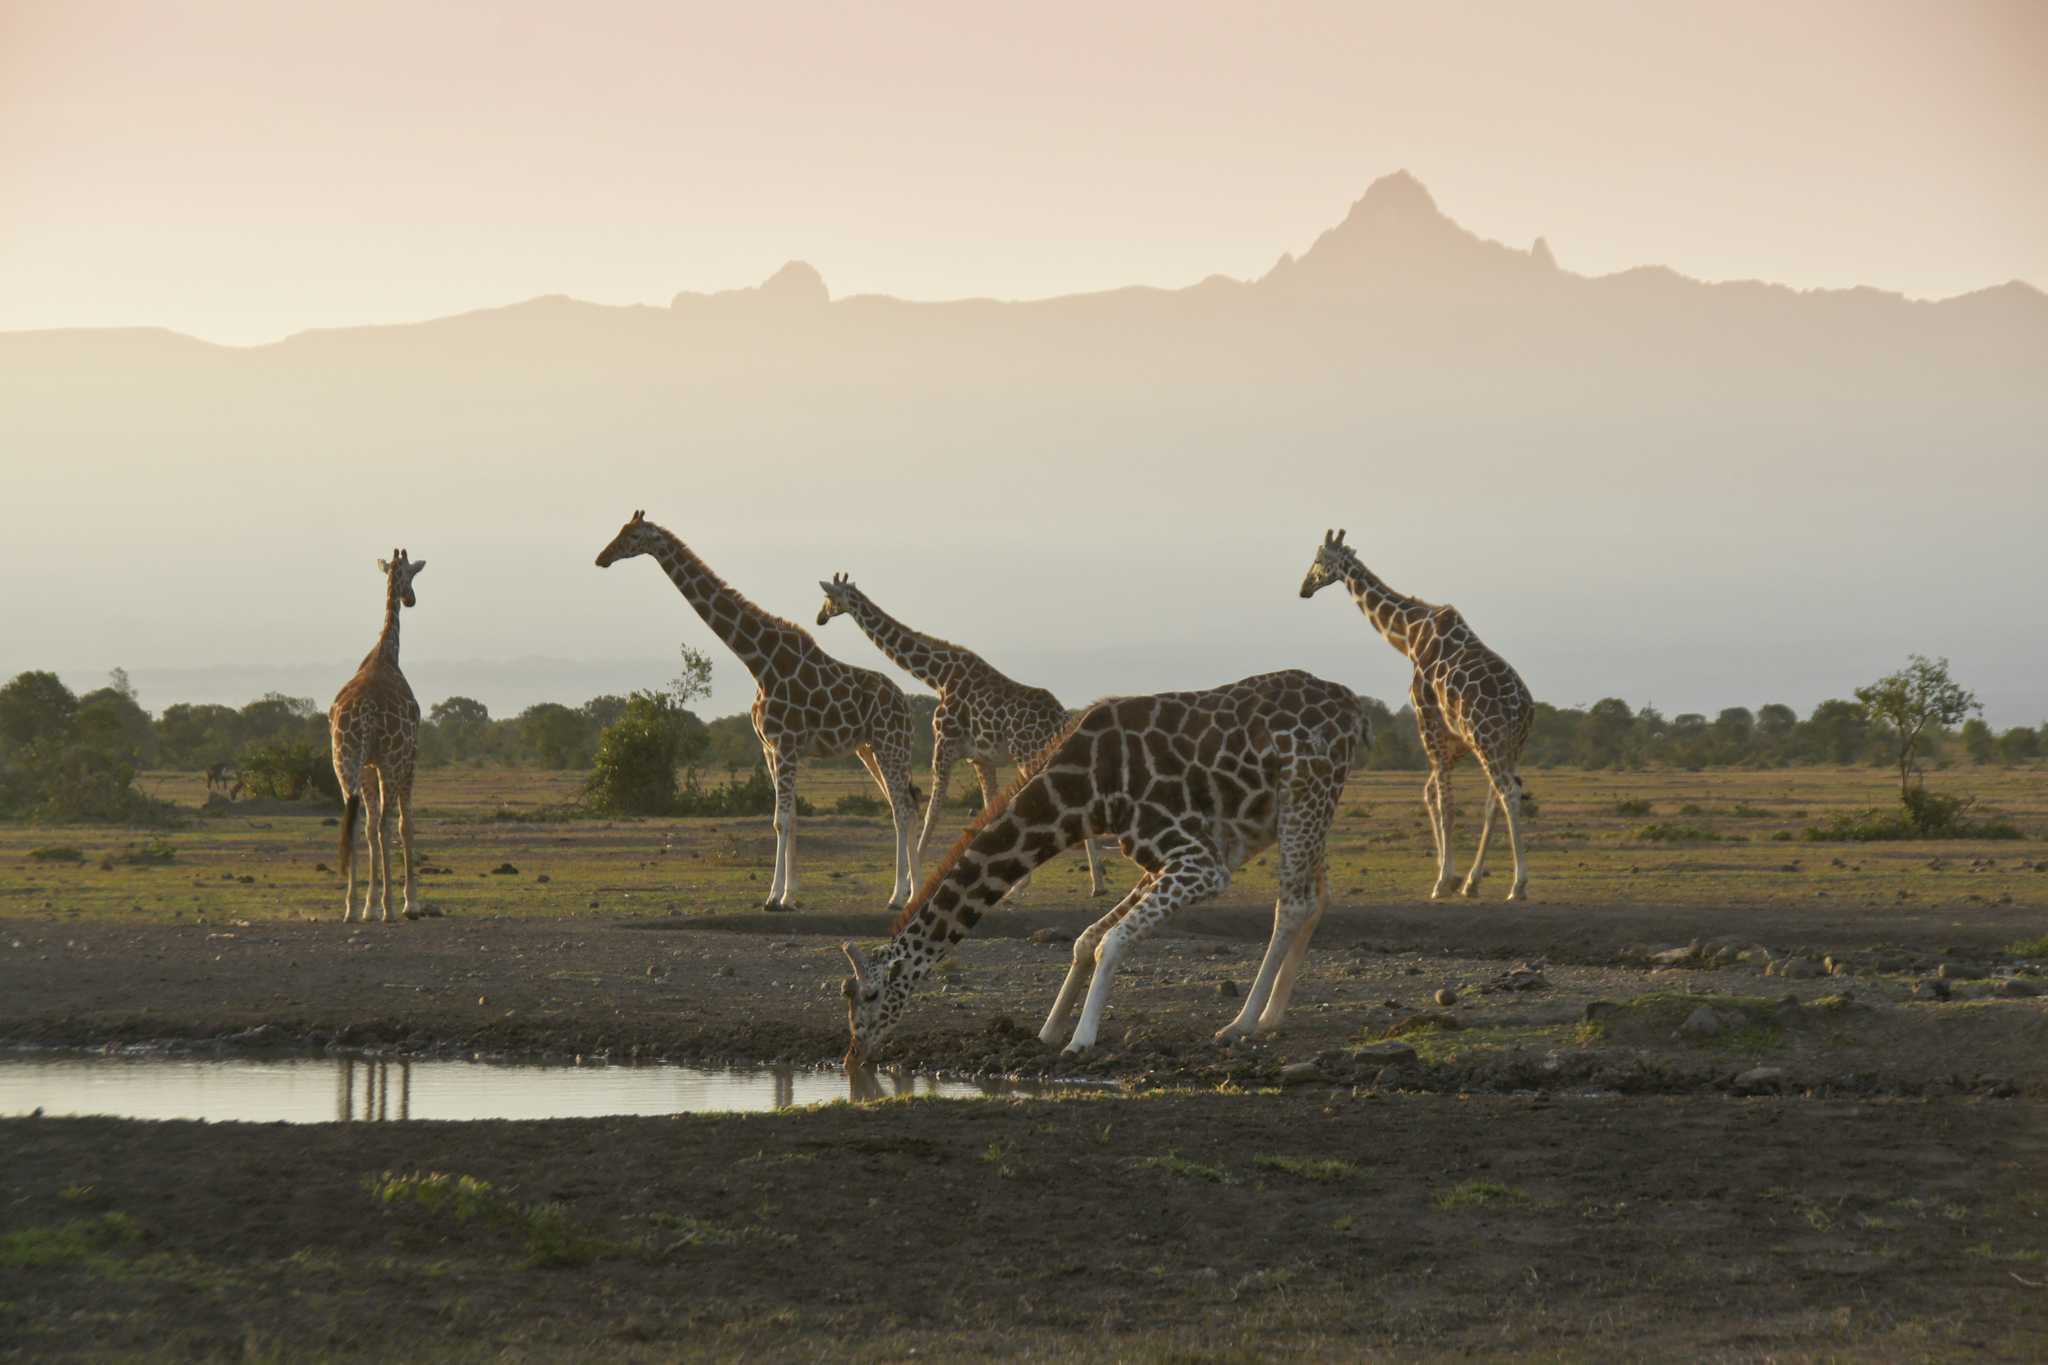 Mount Kenya Wildlife Conservancy